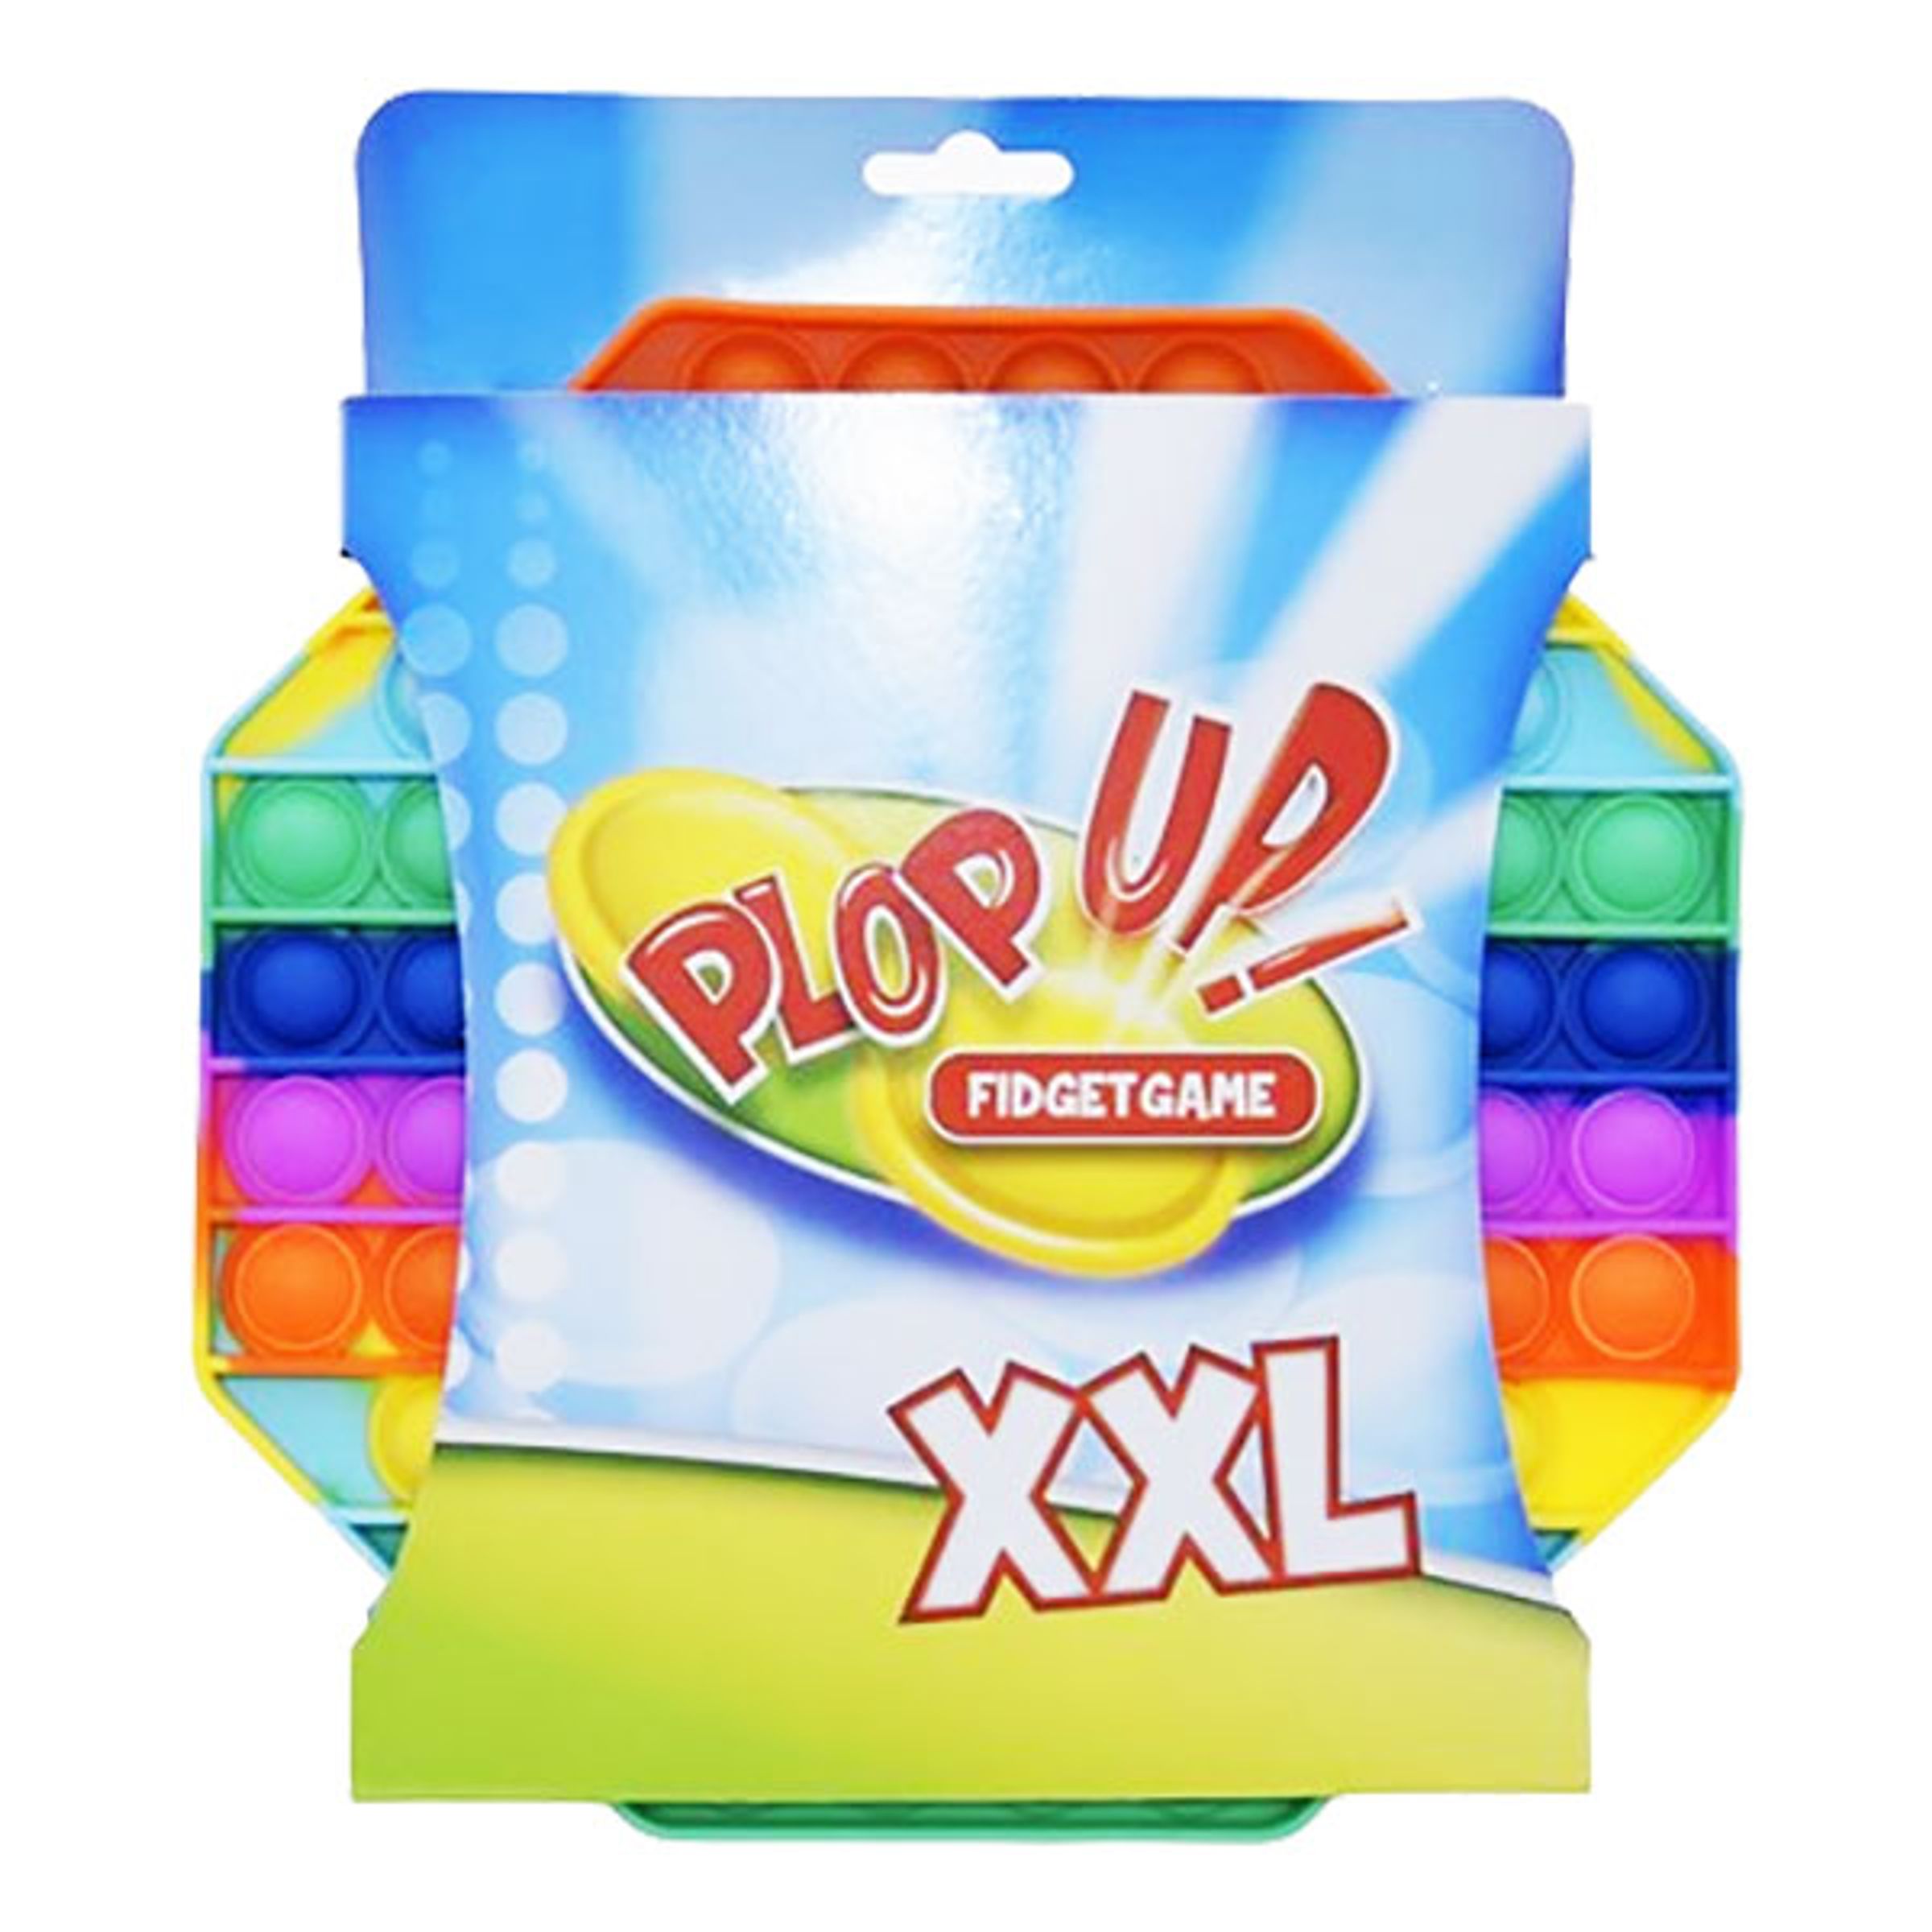 Plop Up Hegaxon XXL Fidget Toy